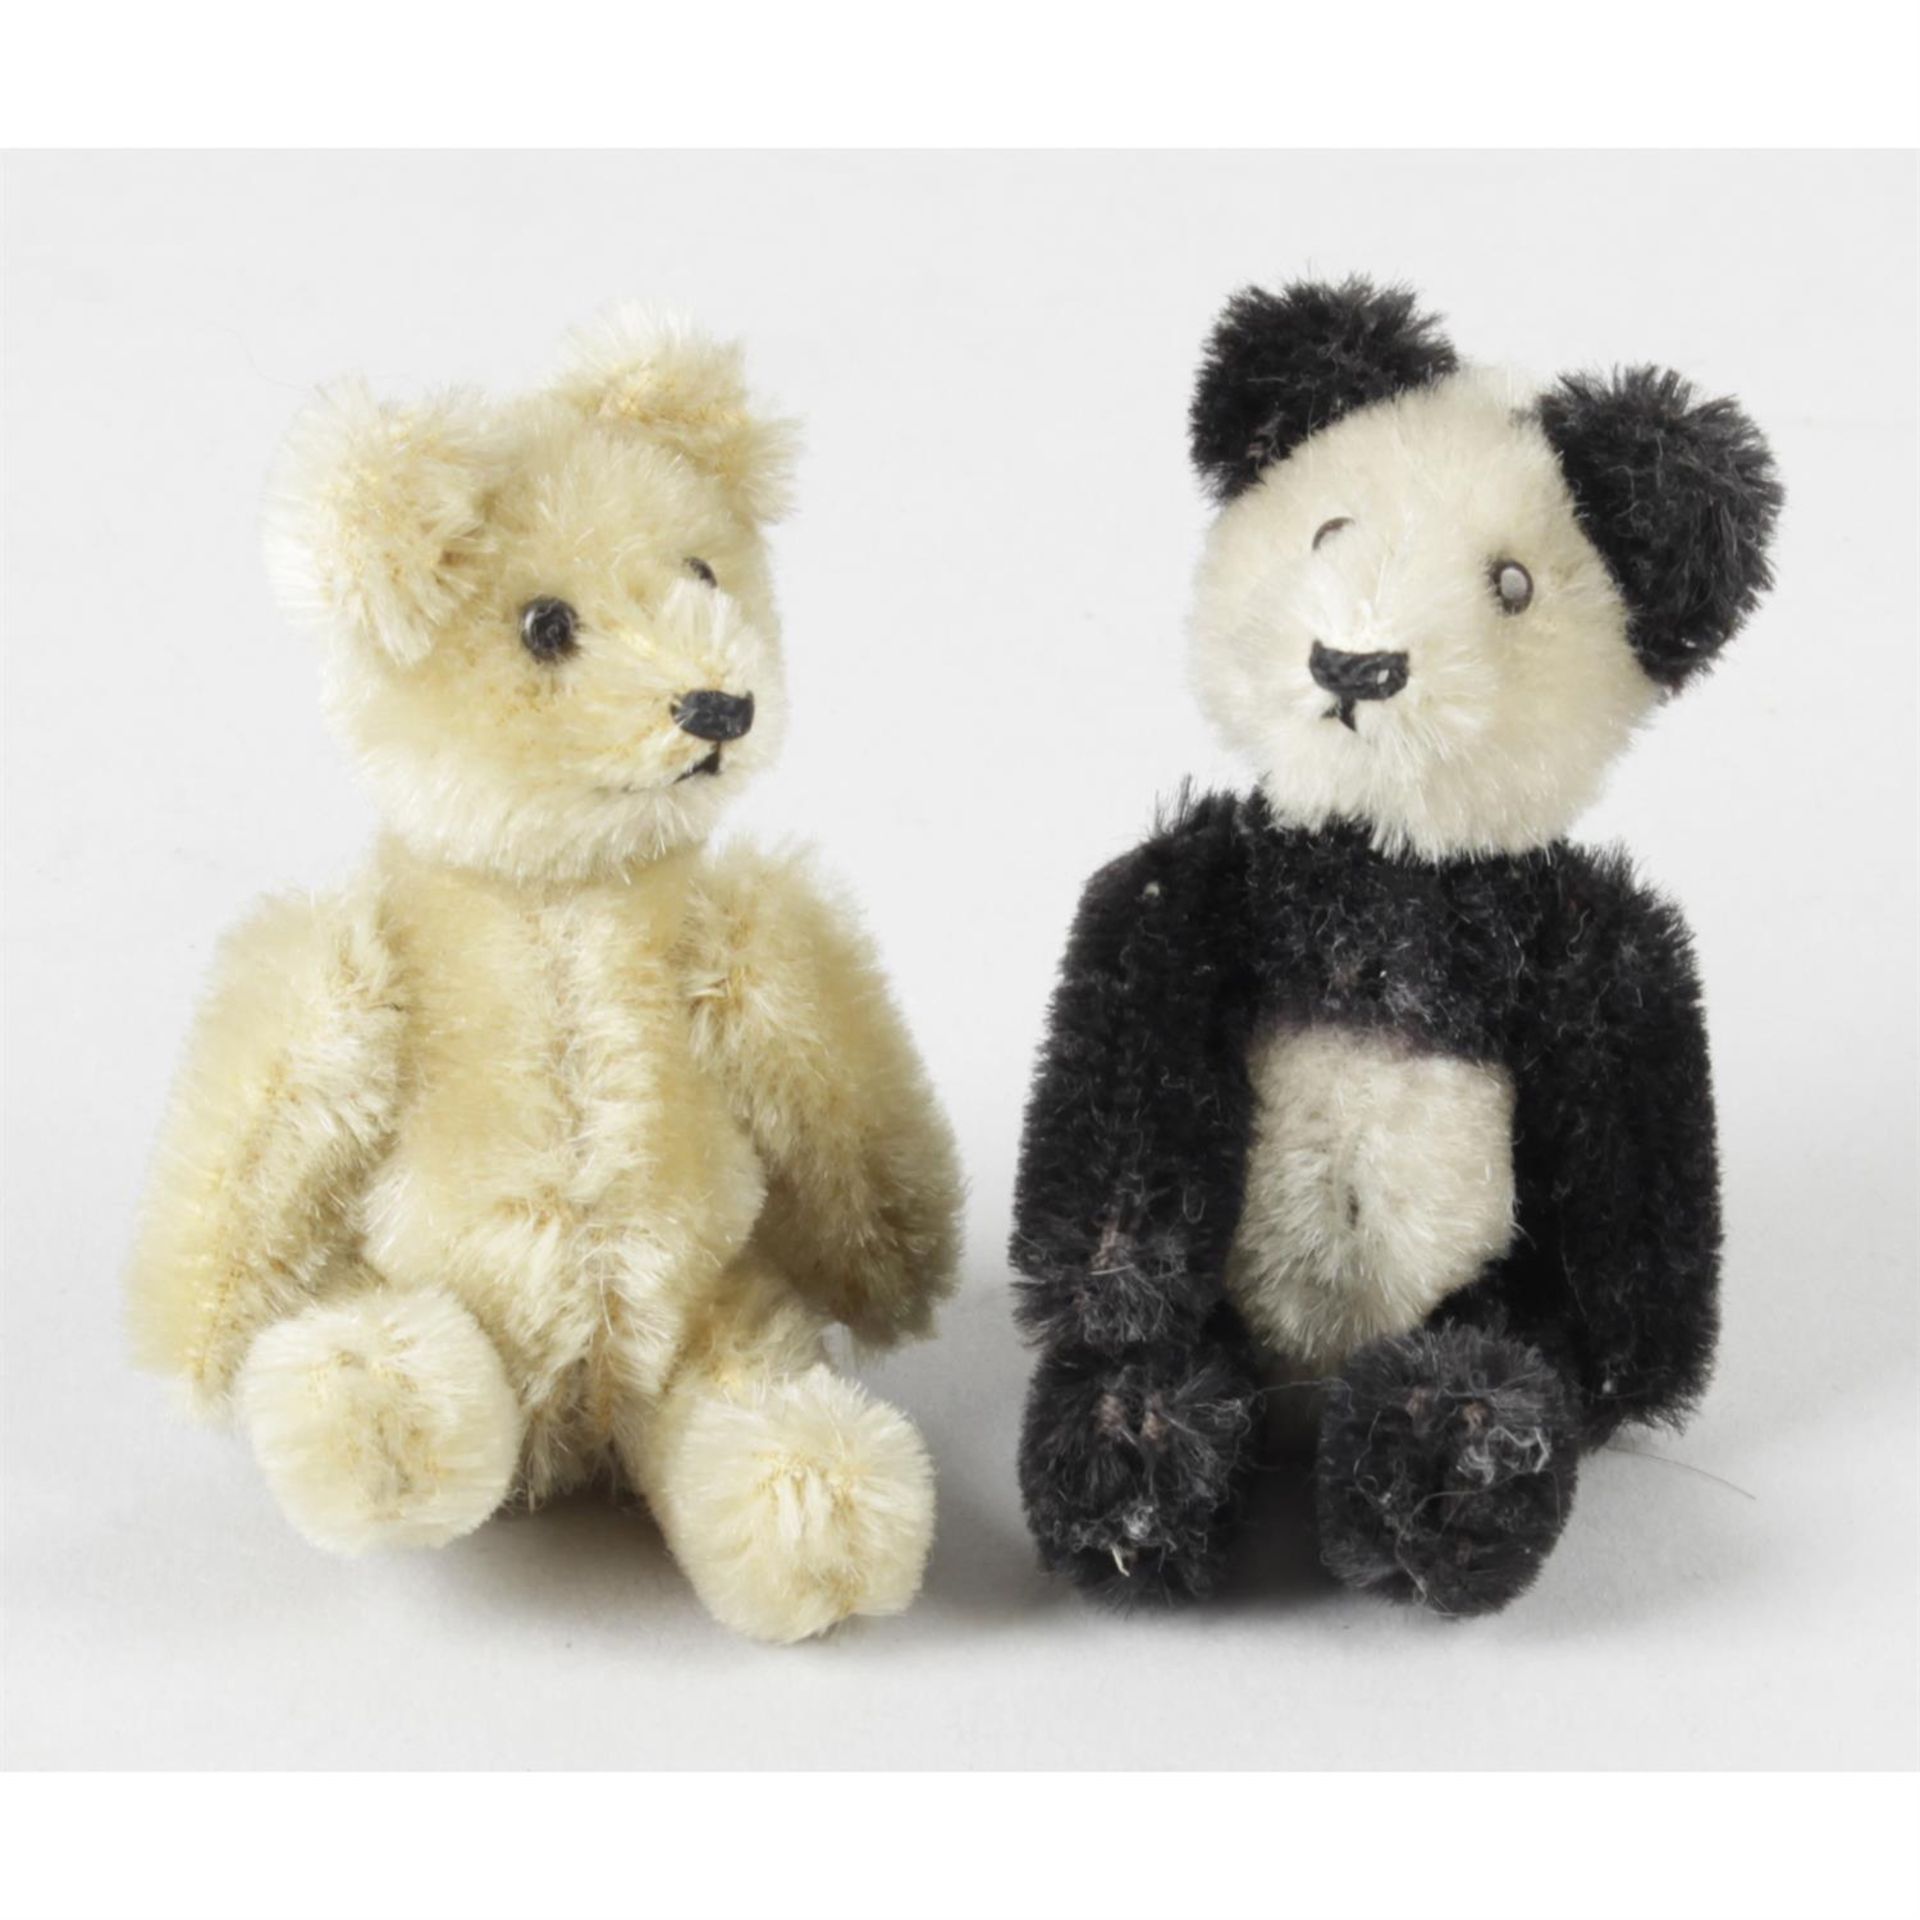 A mid twentieth century Schuco miniature panda bear, together with a similar gold plush teddy bear.